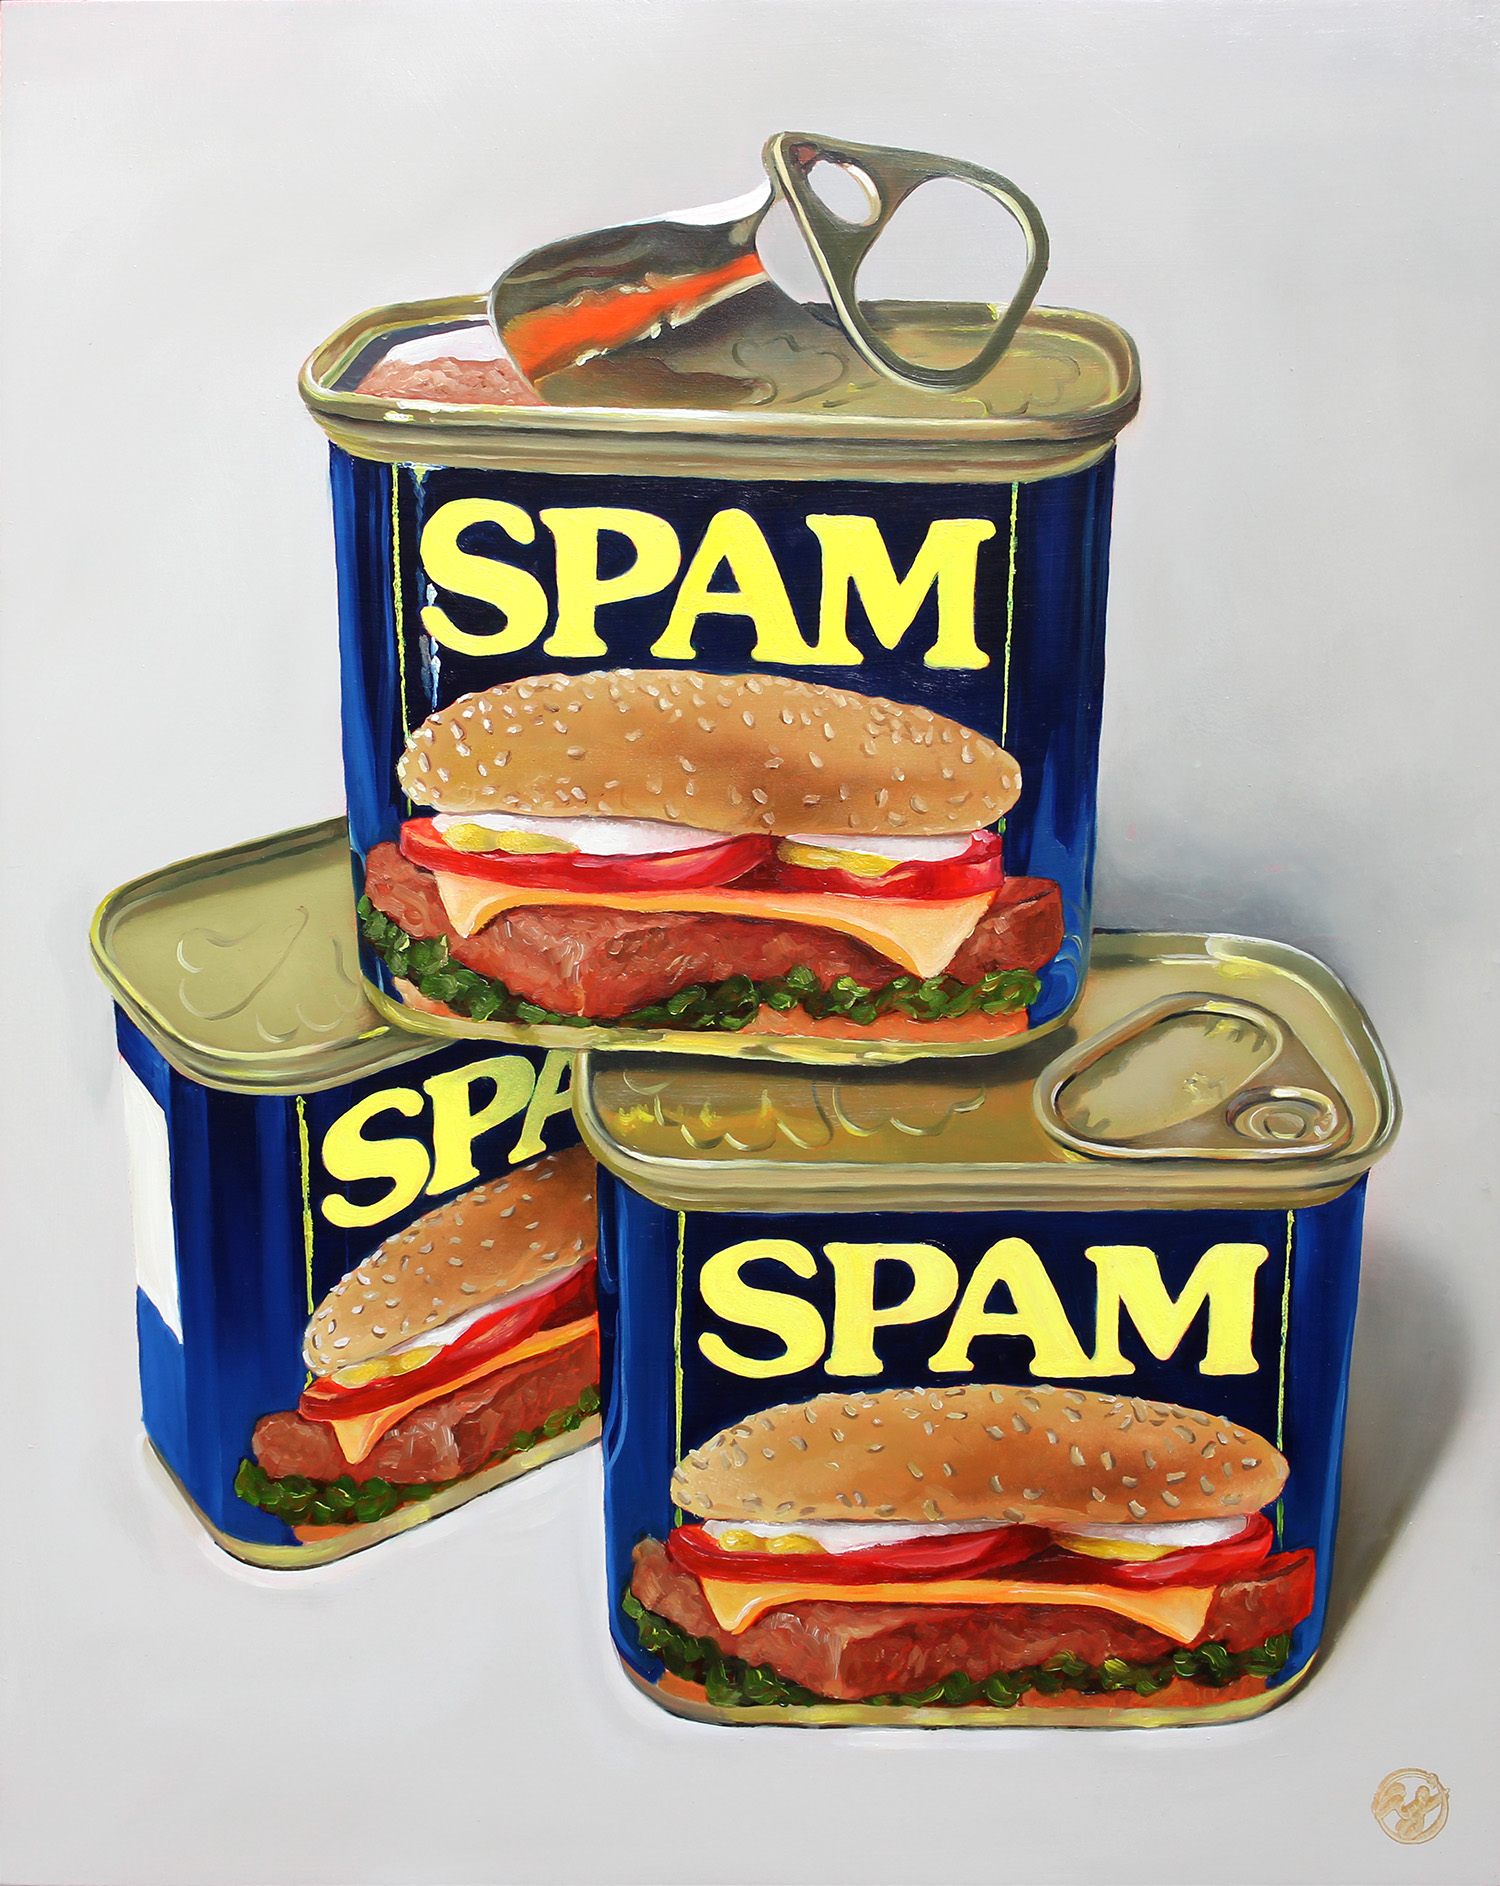 "Spam" 16x20 Original Oil Painting by Abra Johnson